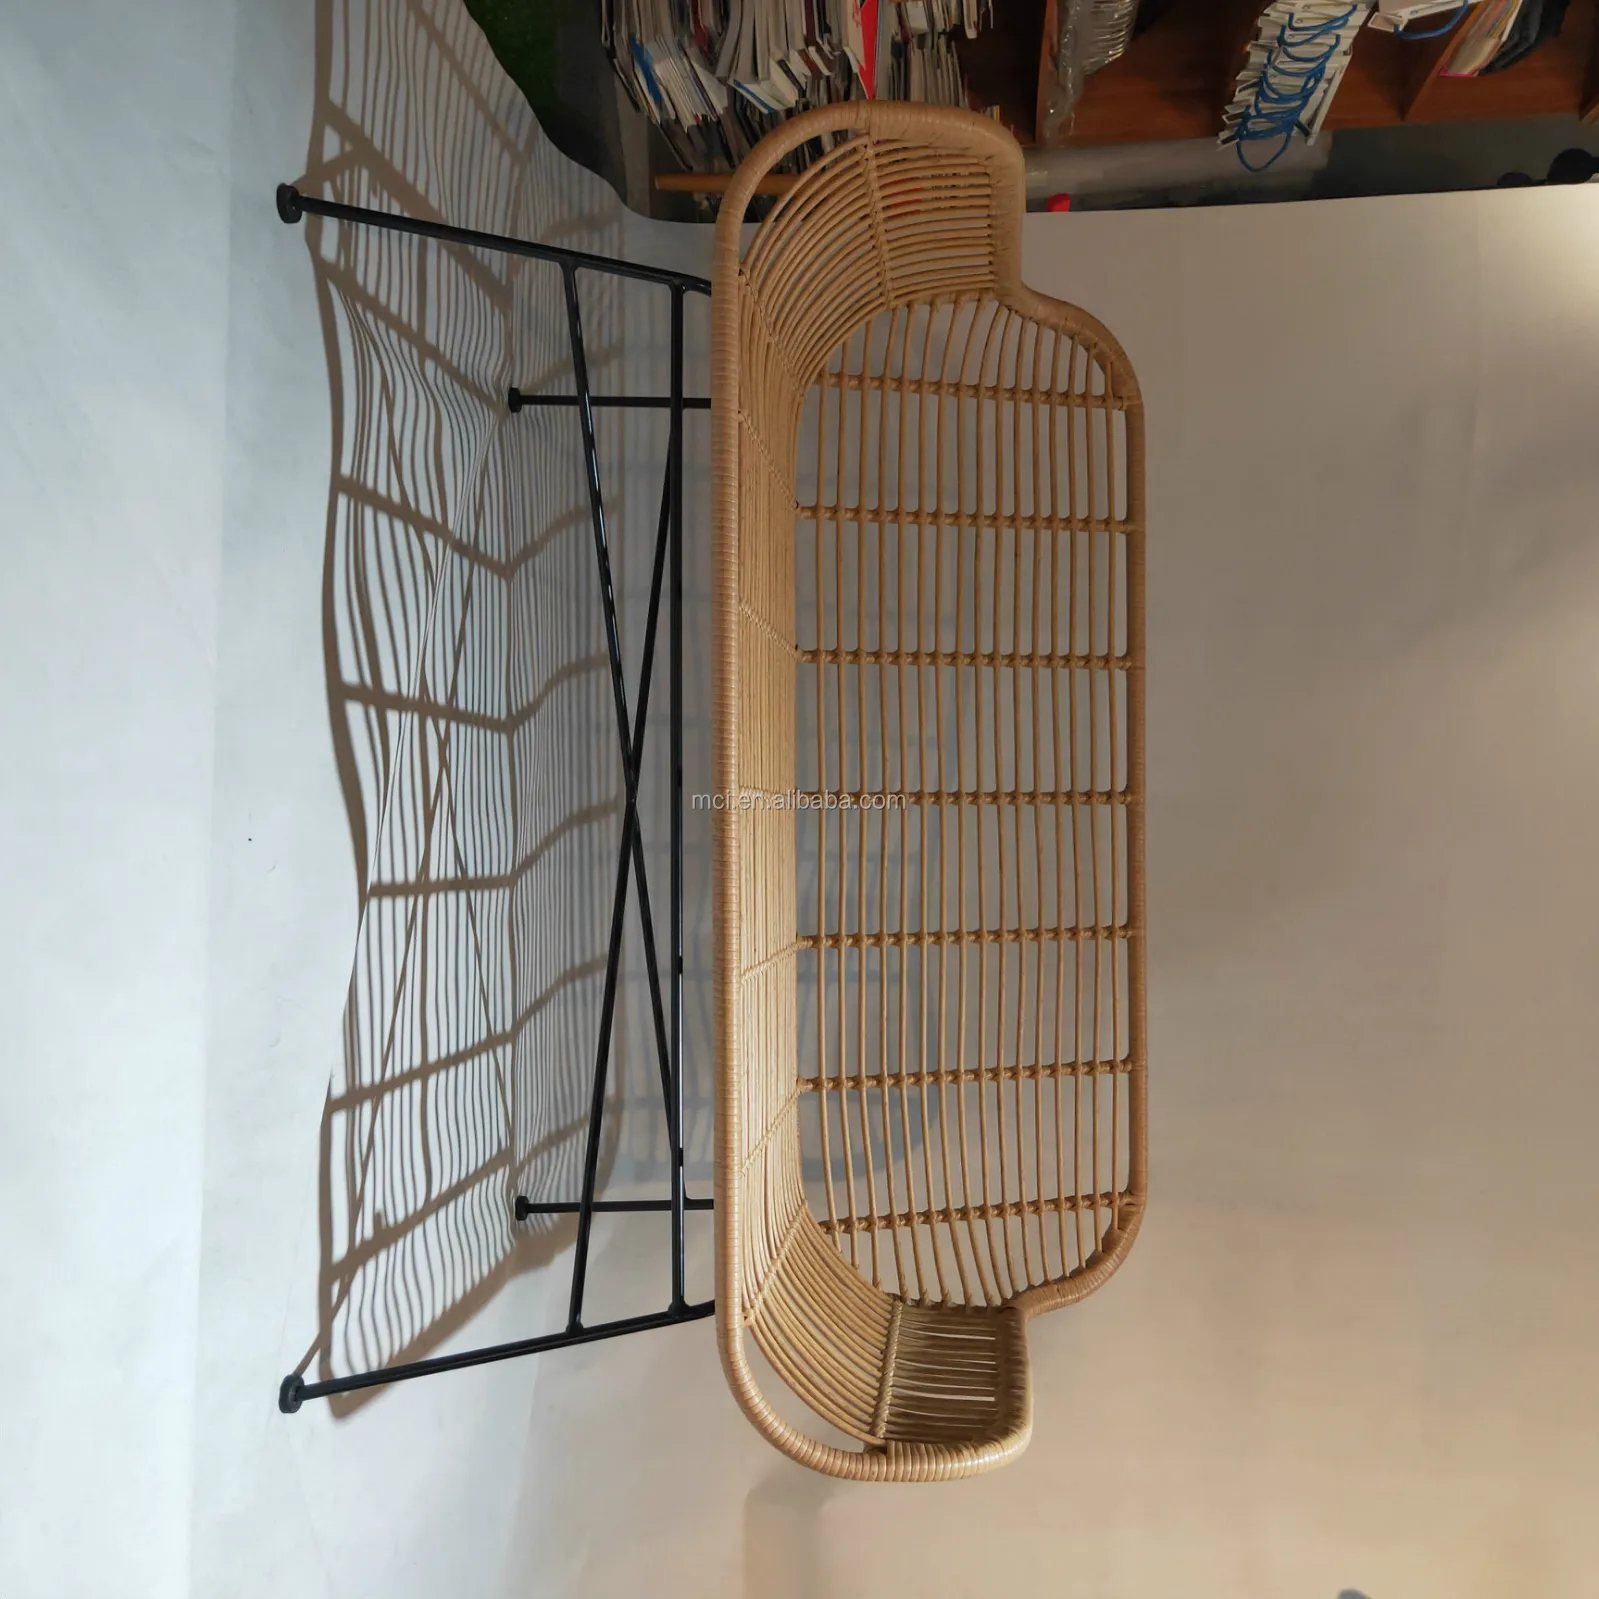 New Design Garden Salon Chair Made In China